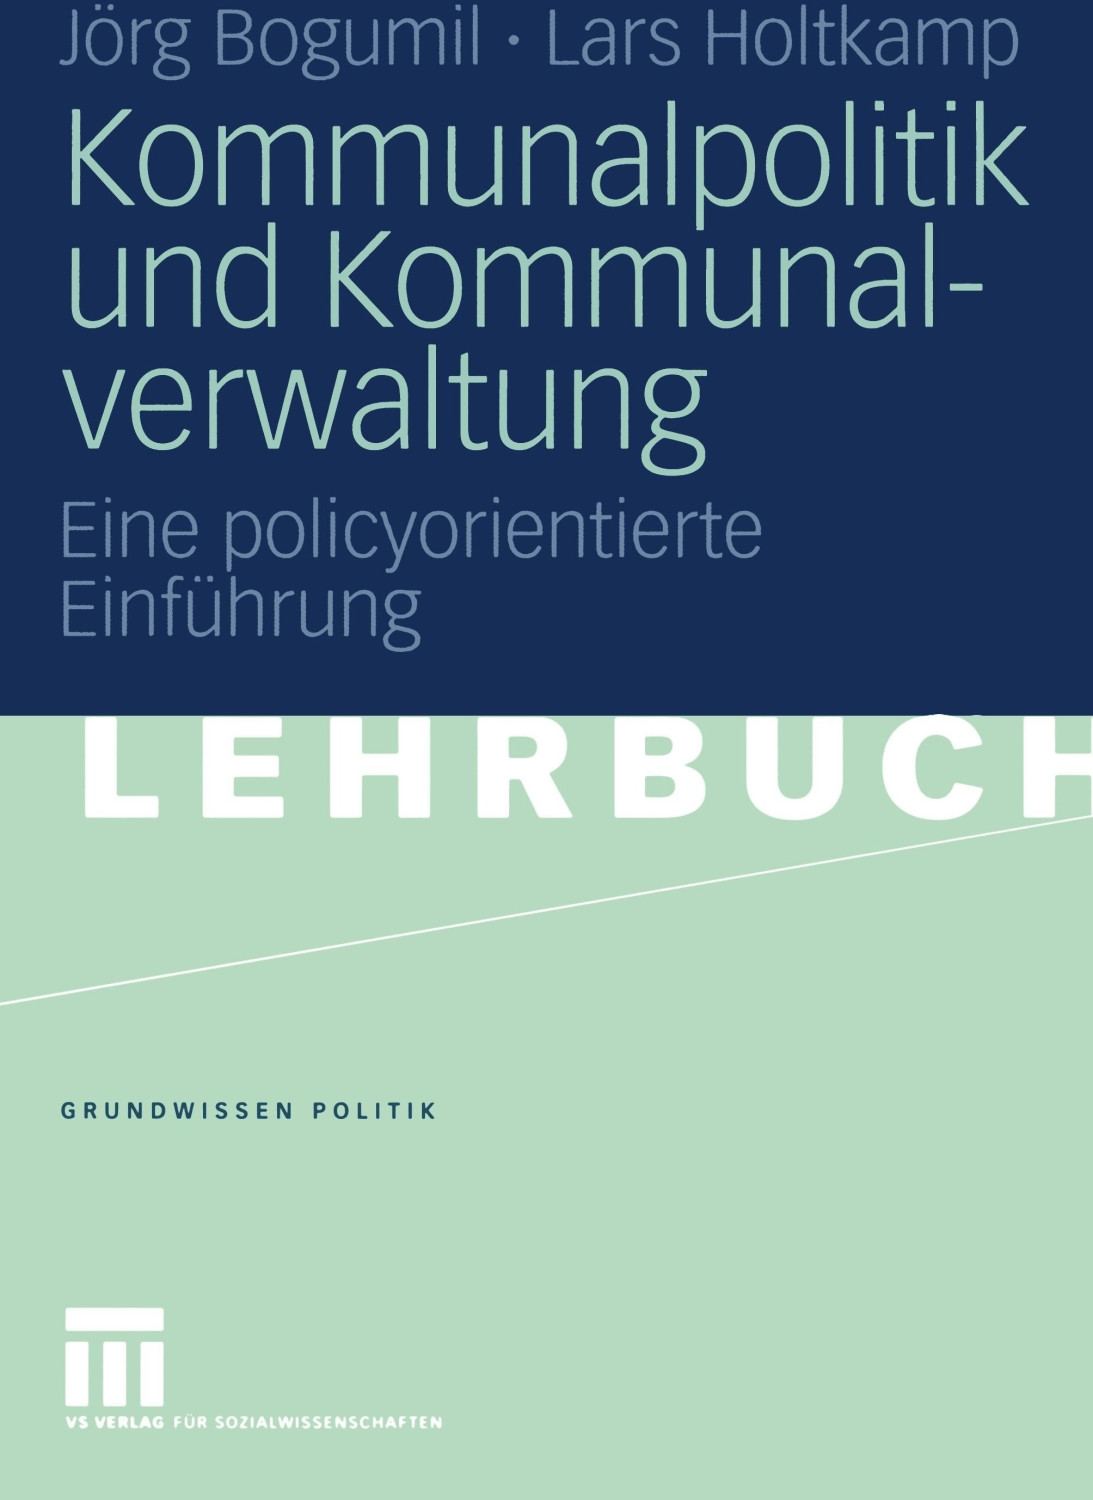 #Kommunalpolitik und Kommunalverwaltung (Bogumil, Jörg Holtkamp, Lars)#